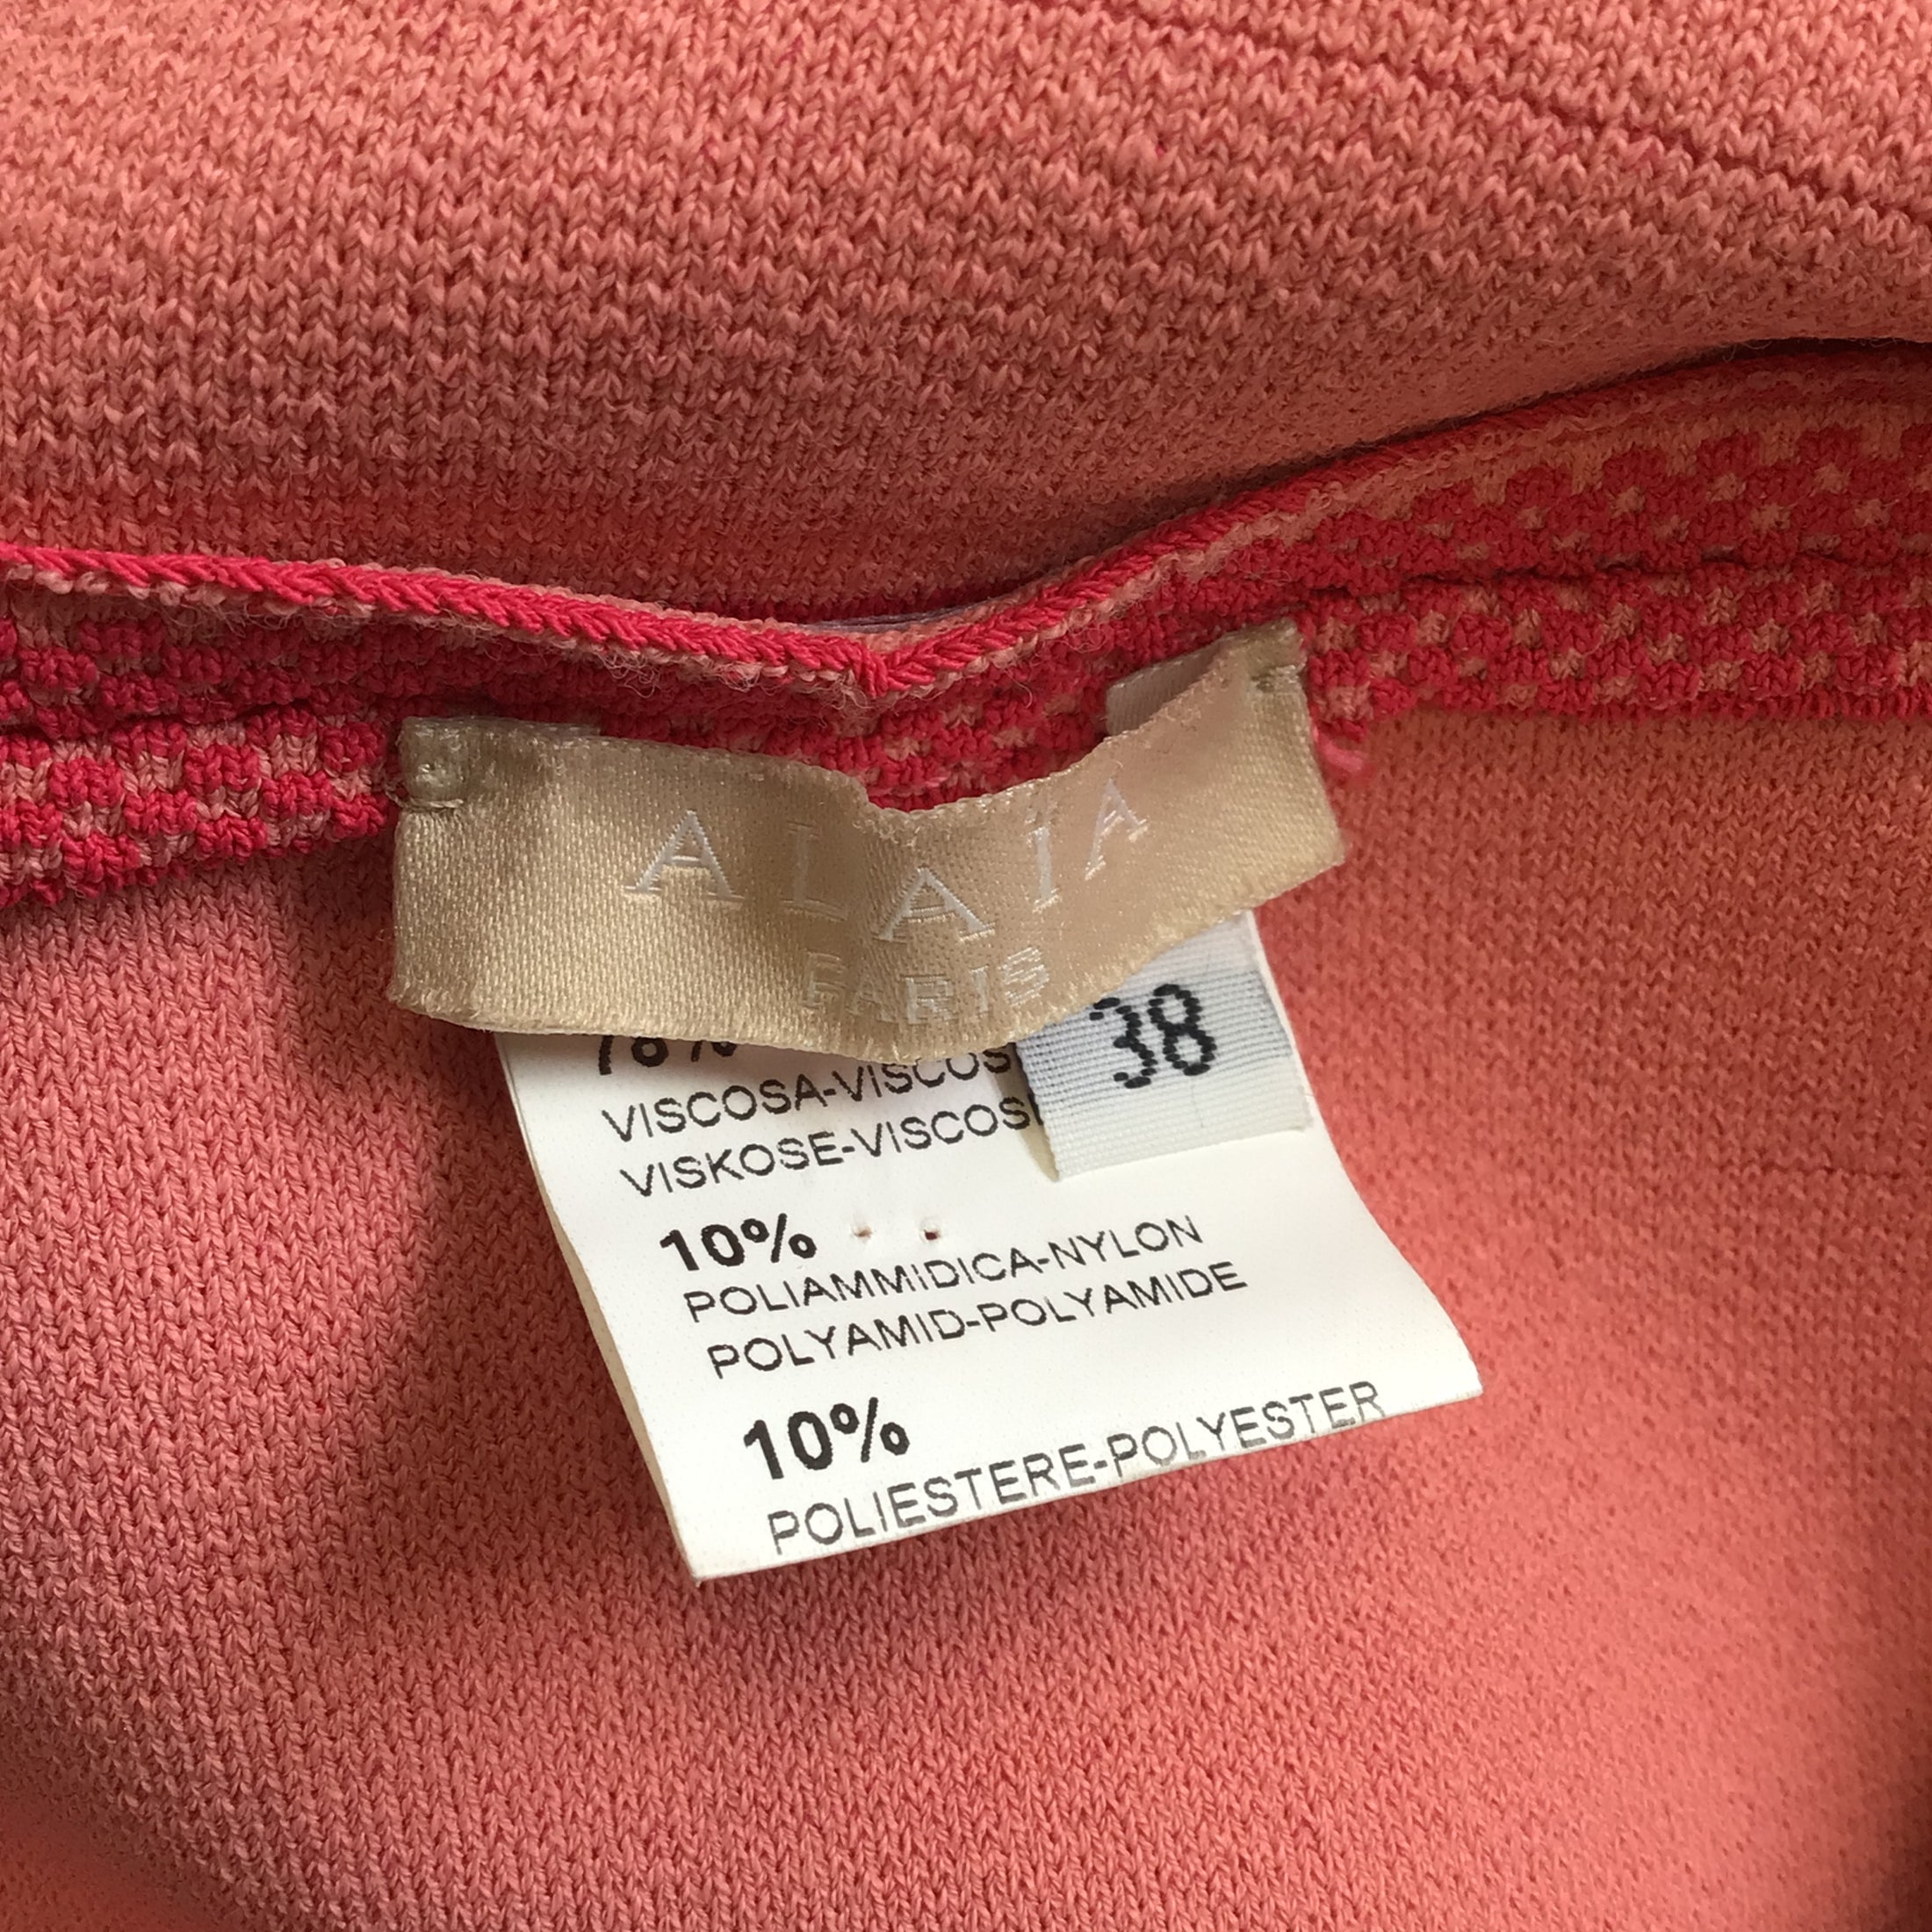 Alaia Pink / Coral Sleeveless V-Neck Flared Knit Dress